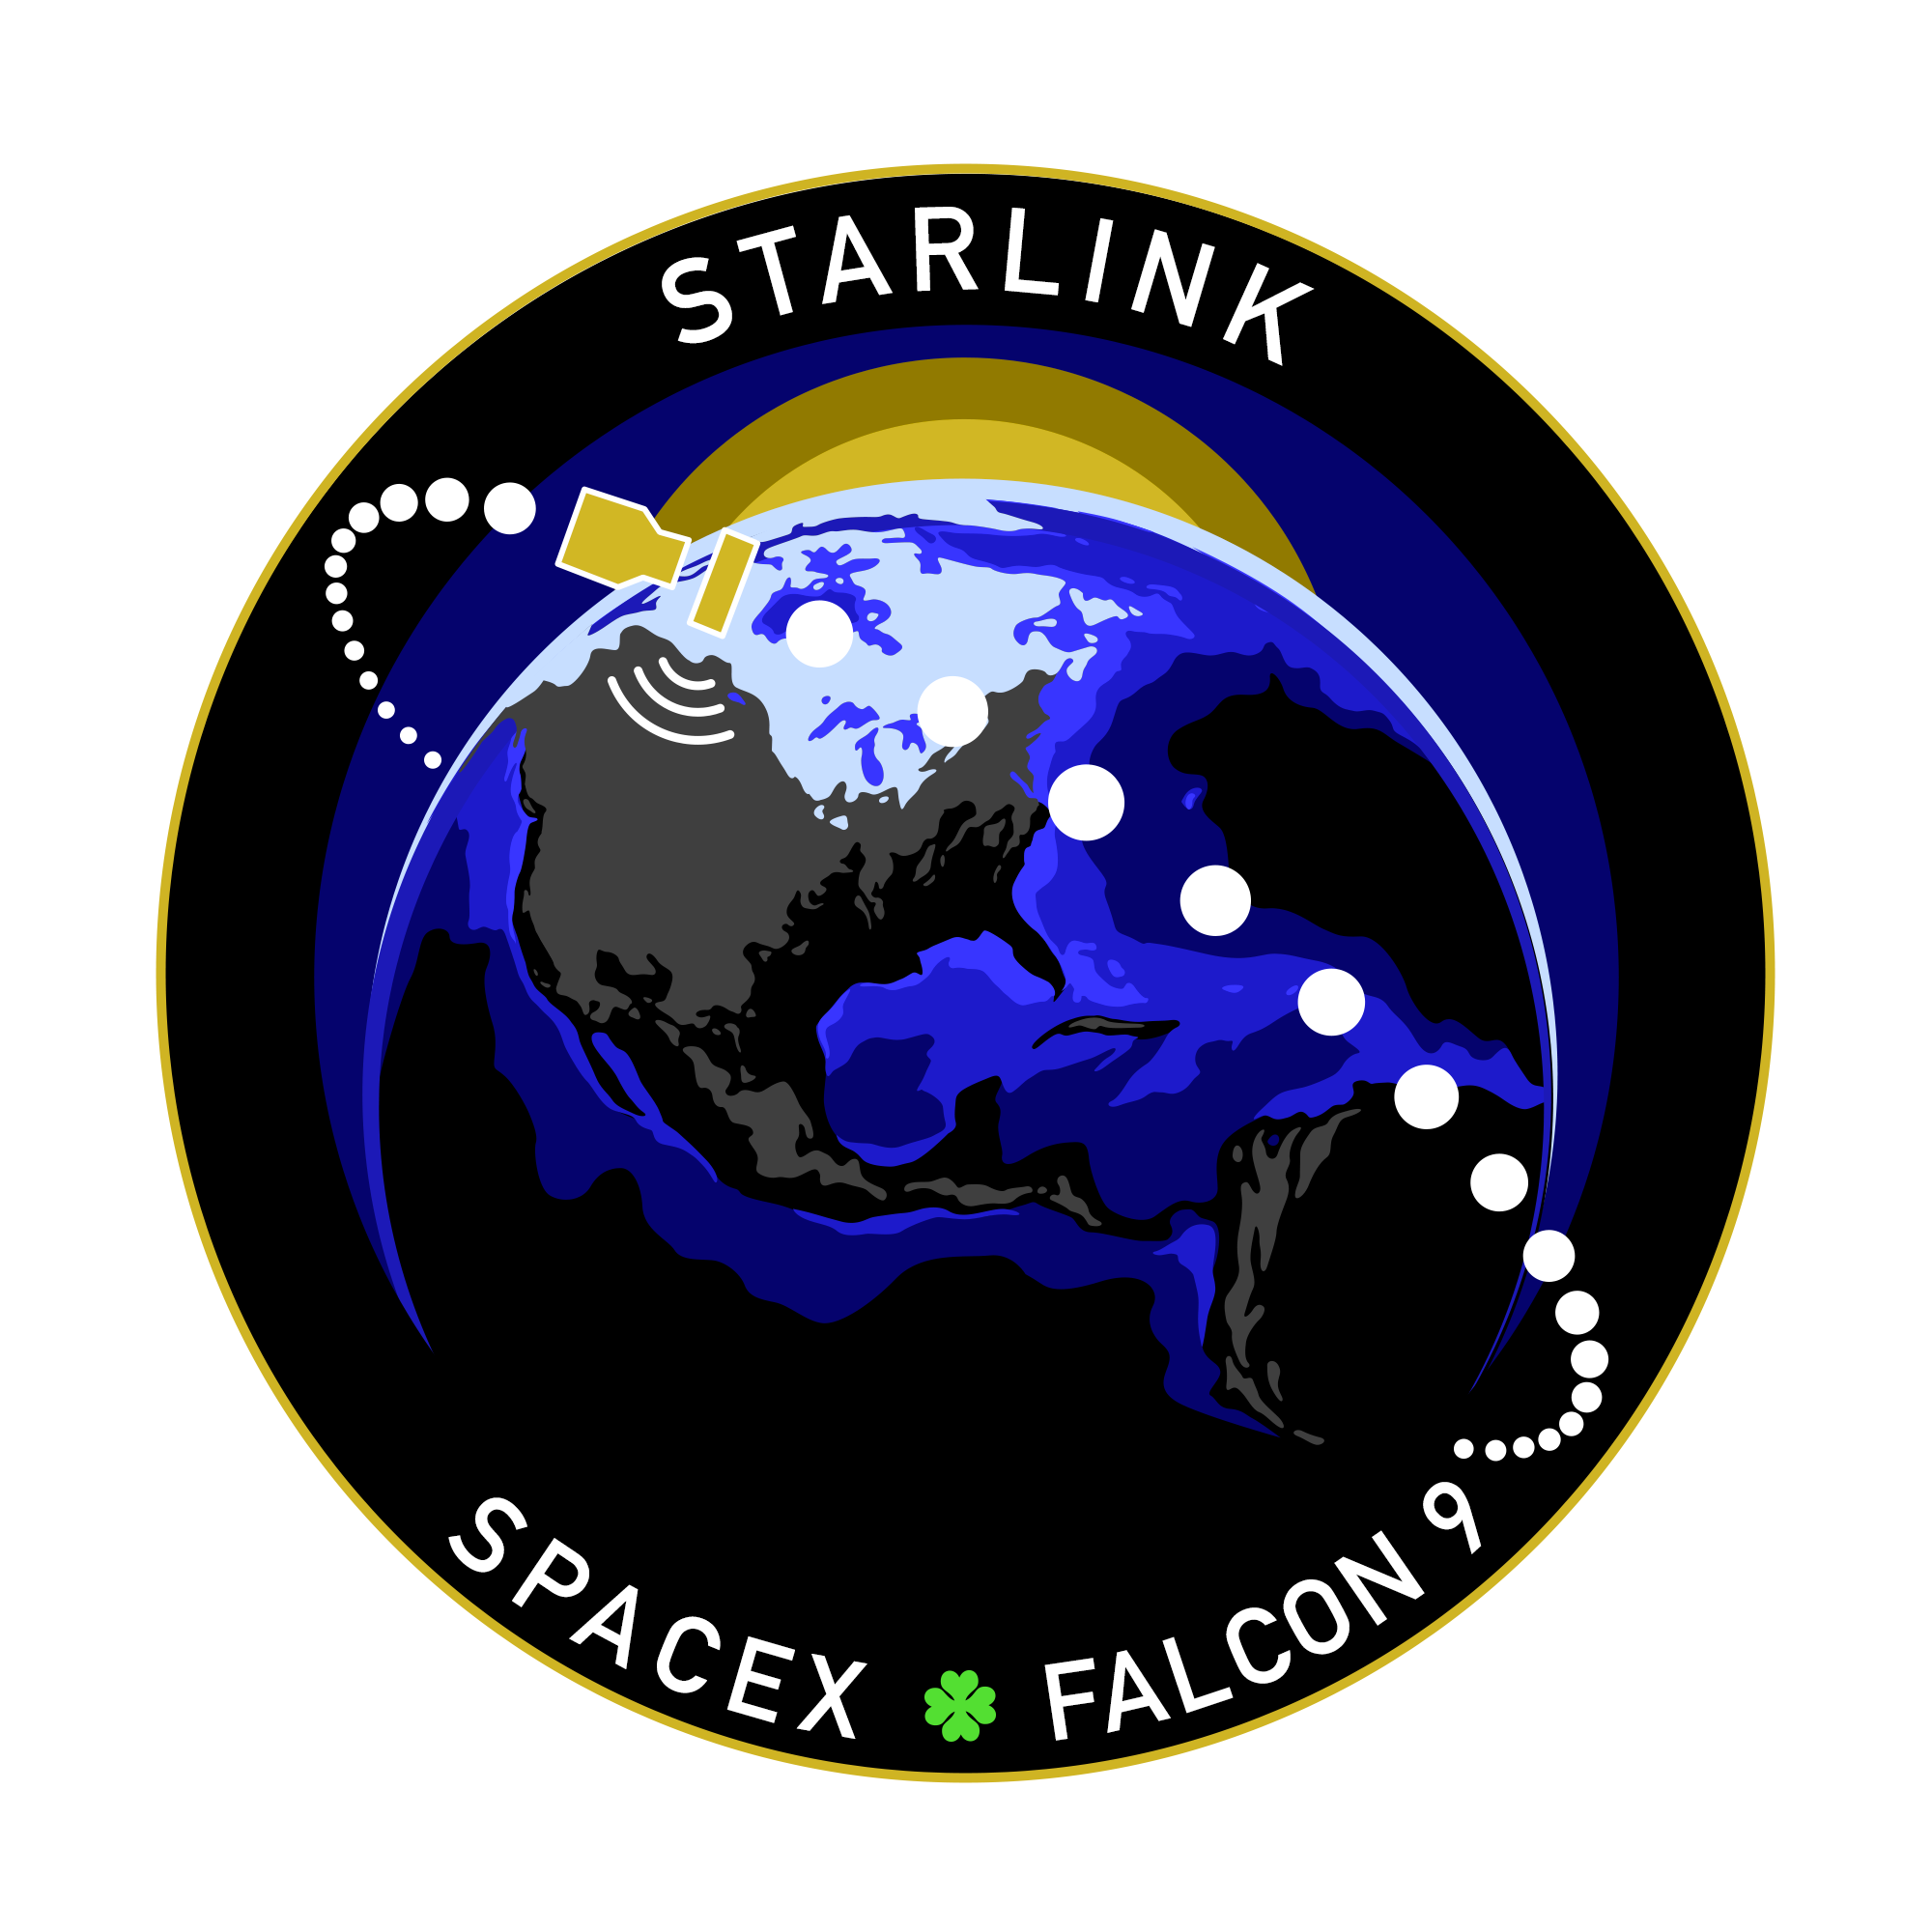 Starlink-10 (v1.0) & SkySat 19-21